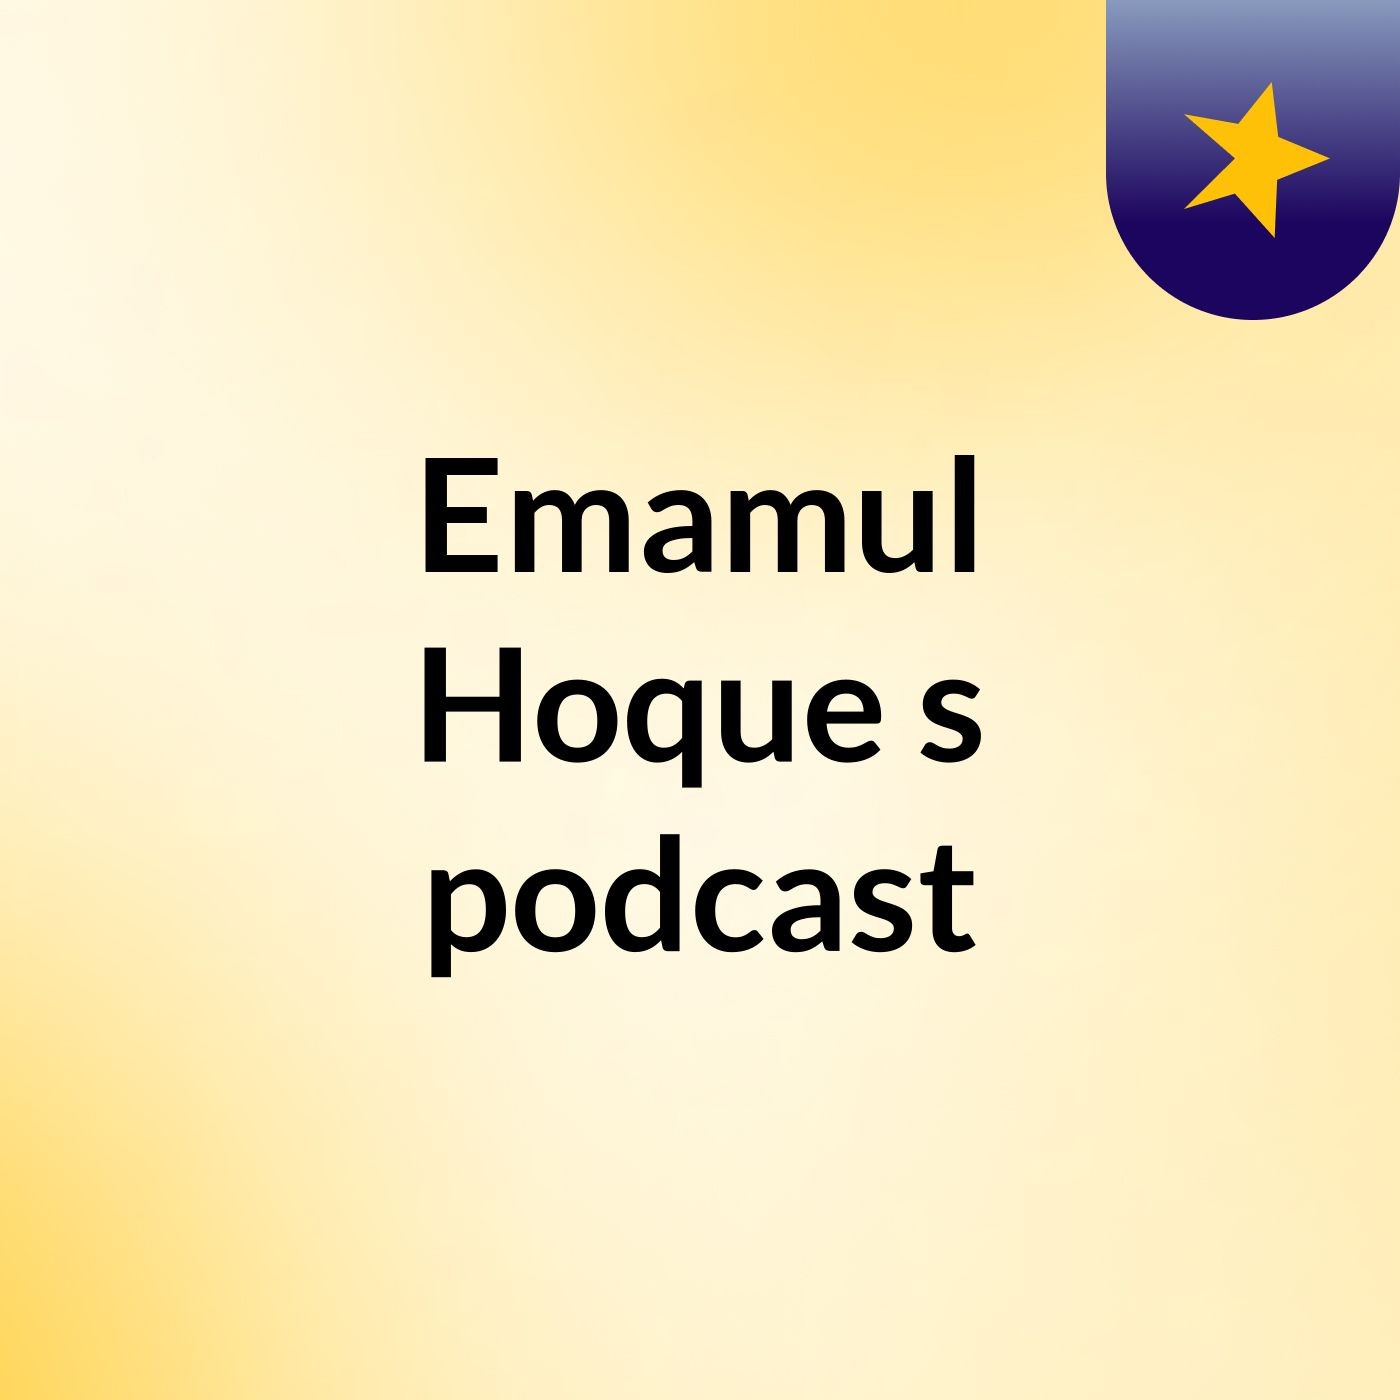 Emamul Hoque's podcast